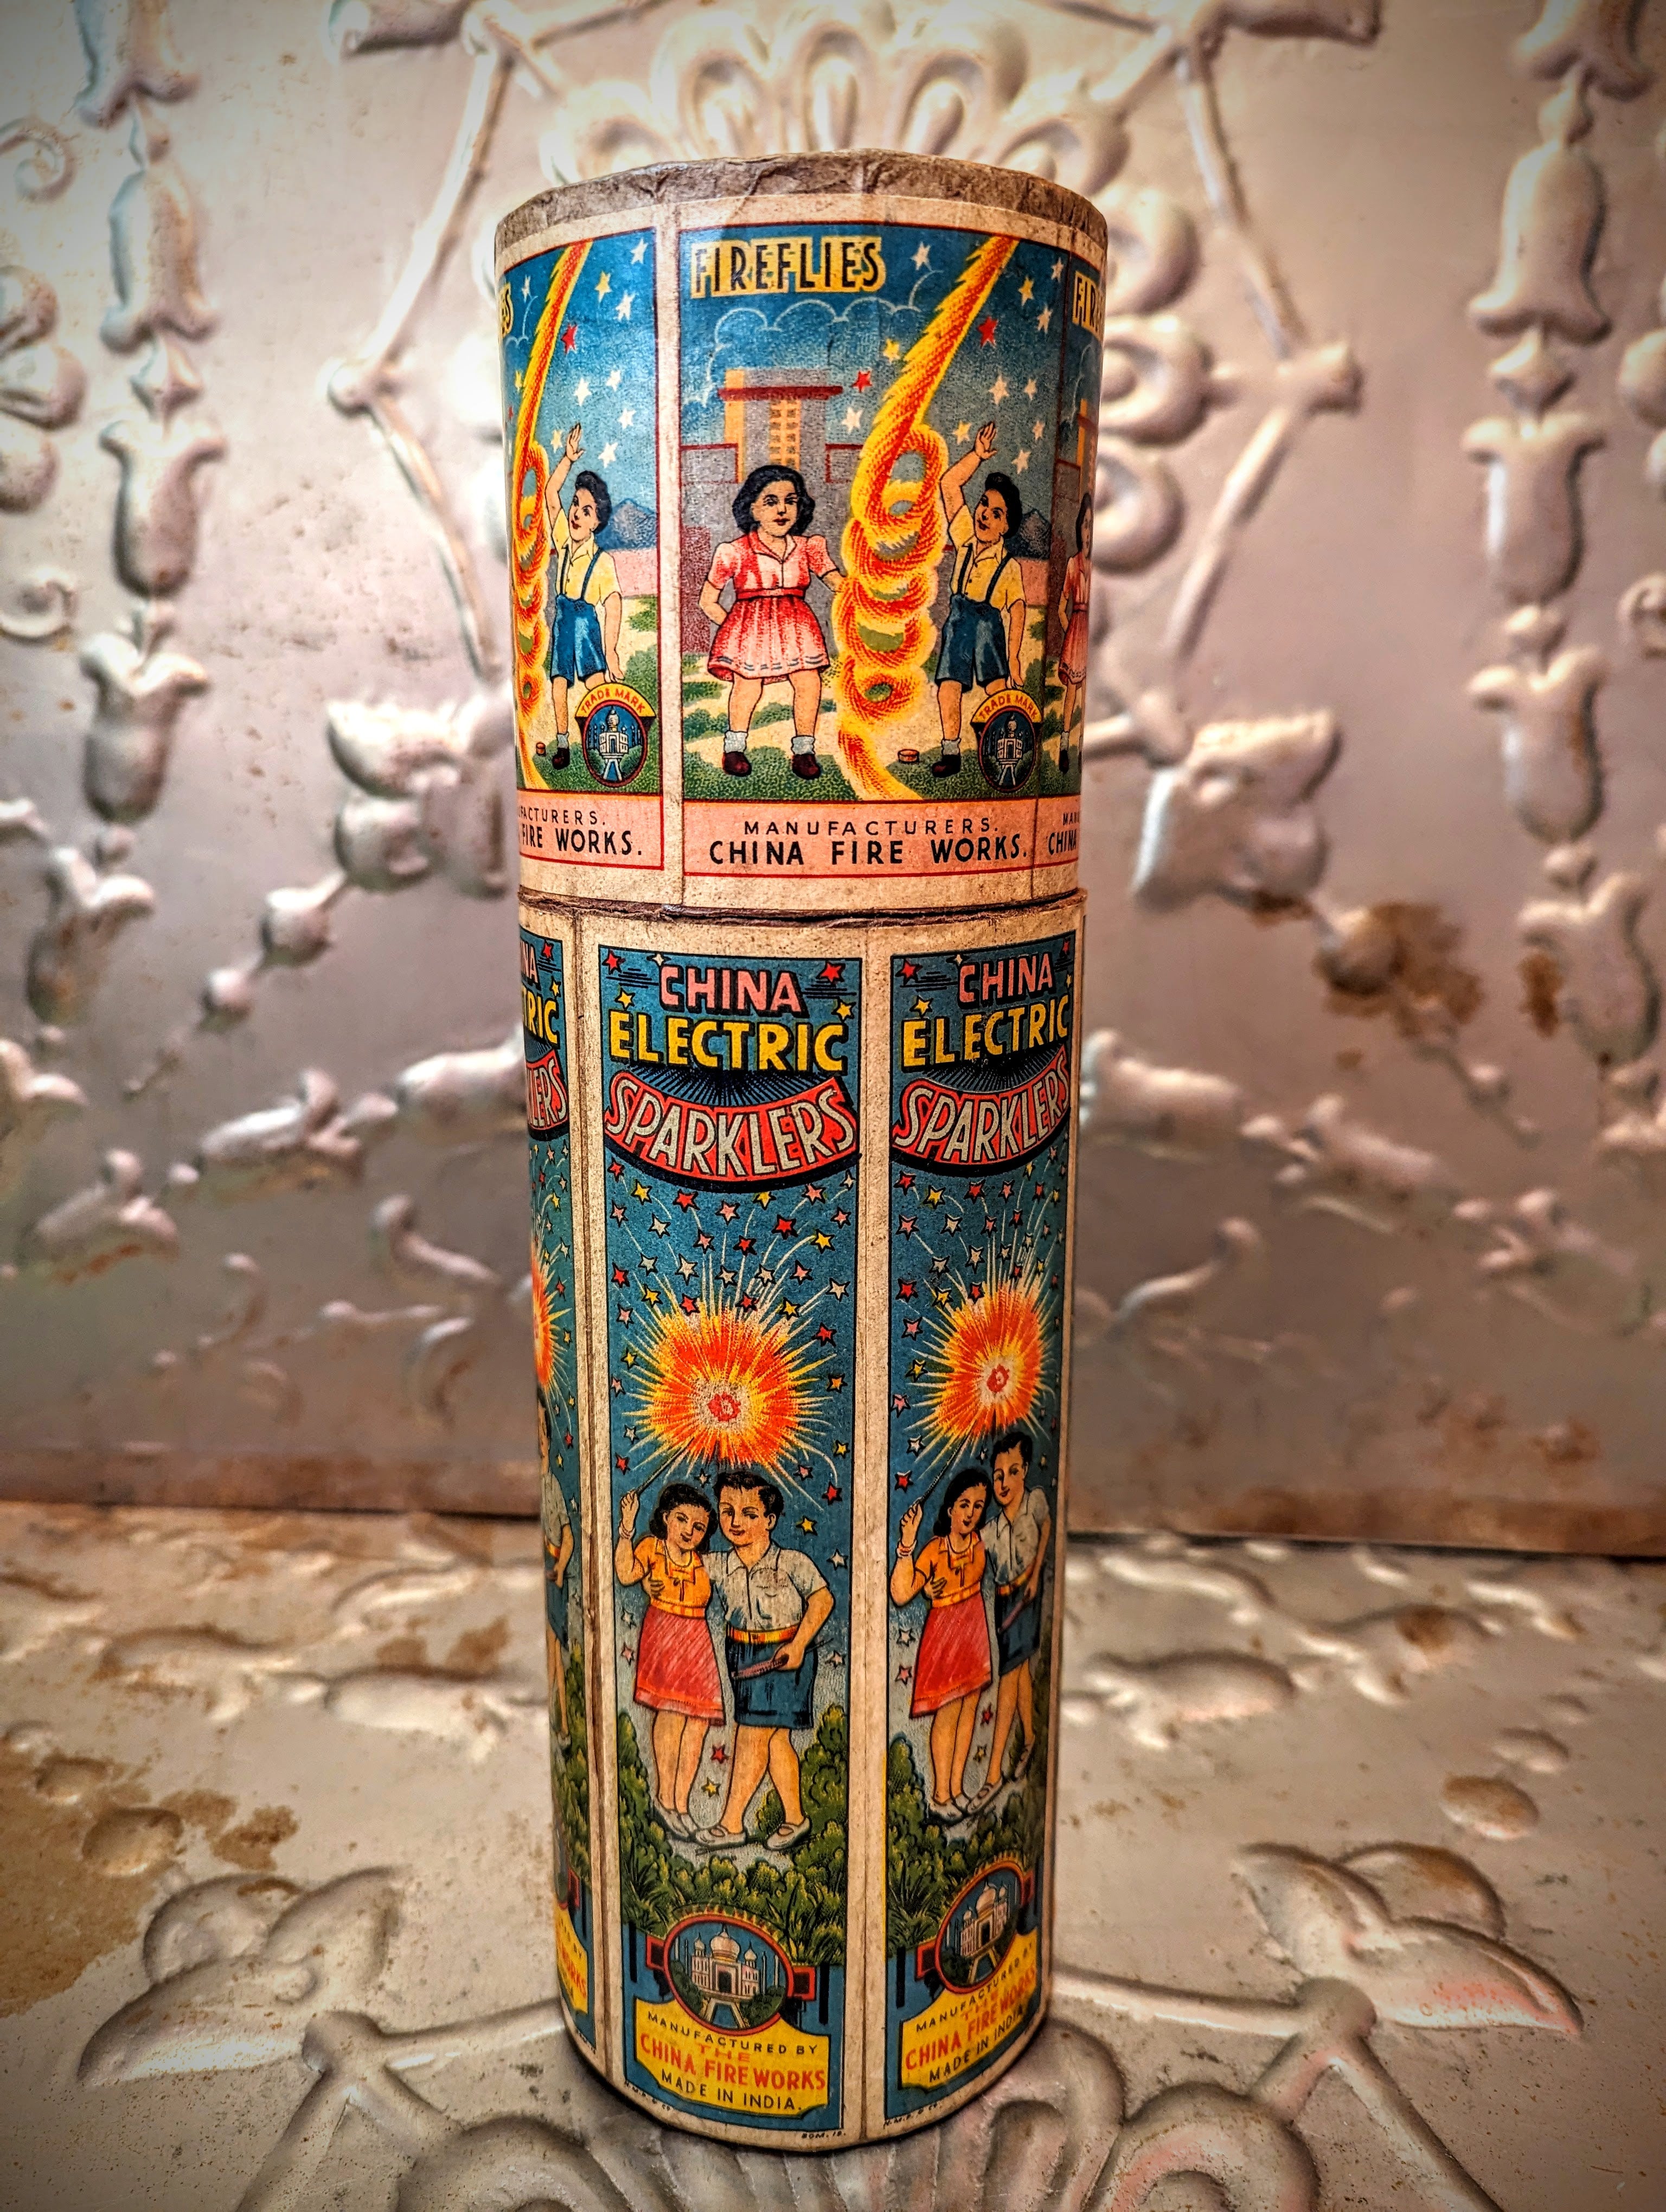 Vintage indian firework boxes